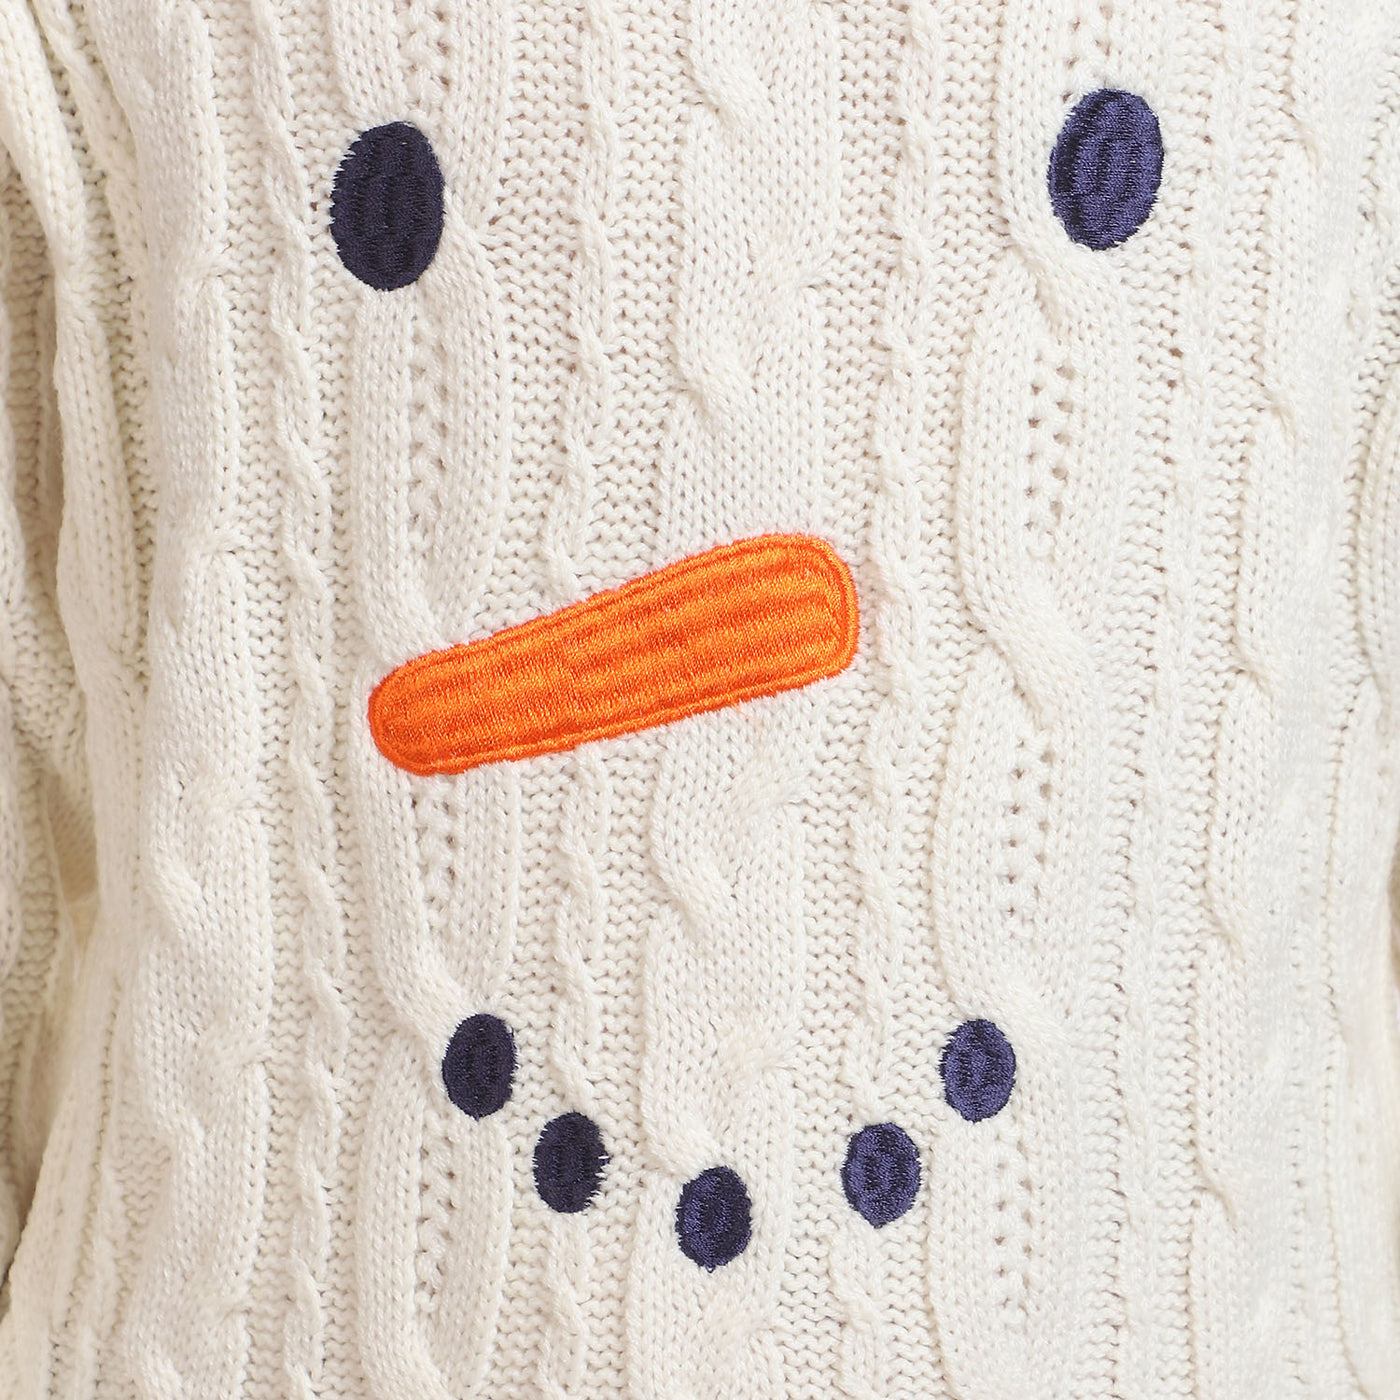 Boys Acrylic Full Sleeves Sweater -White